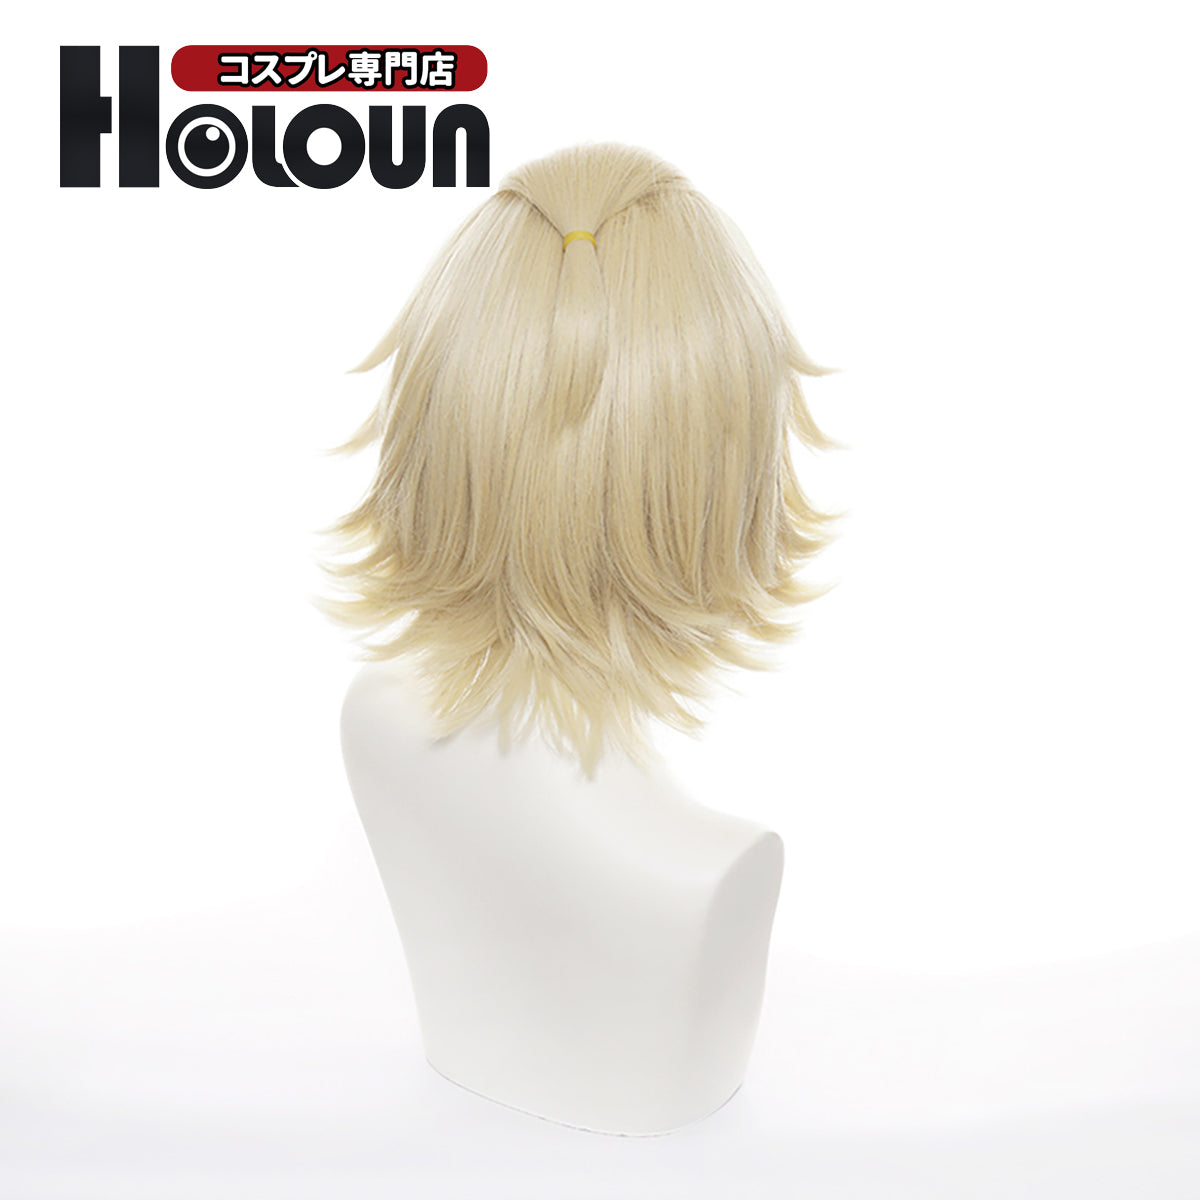 HOLOUN Tokyo Anime Manjiro Sano Mikey Cosplay Costume Wig New Experience Exhibition Cover Jacket